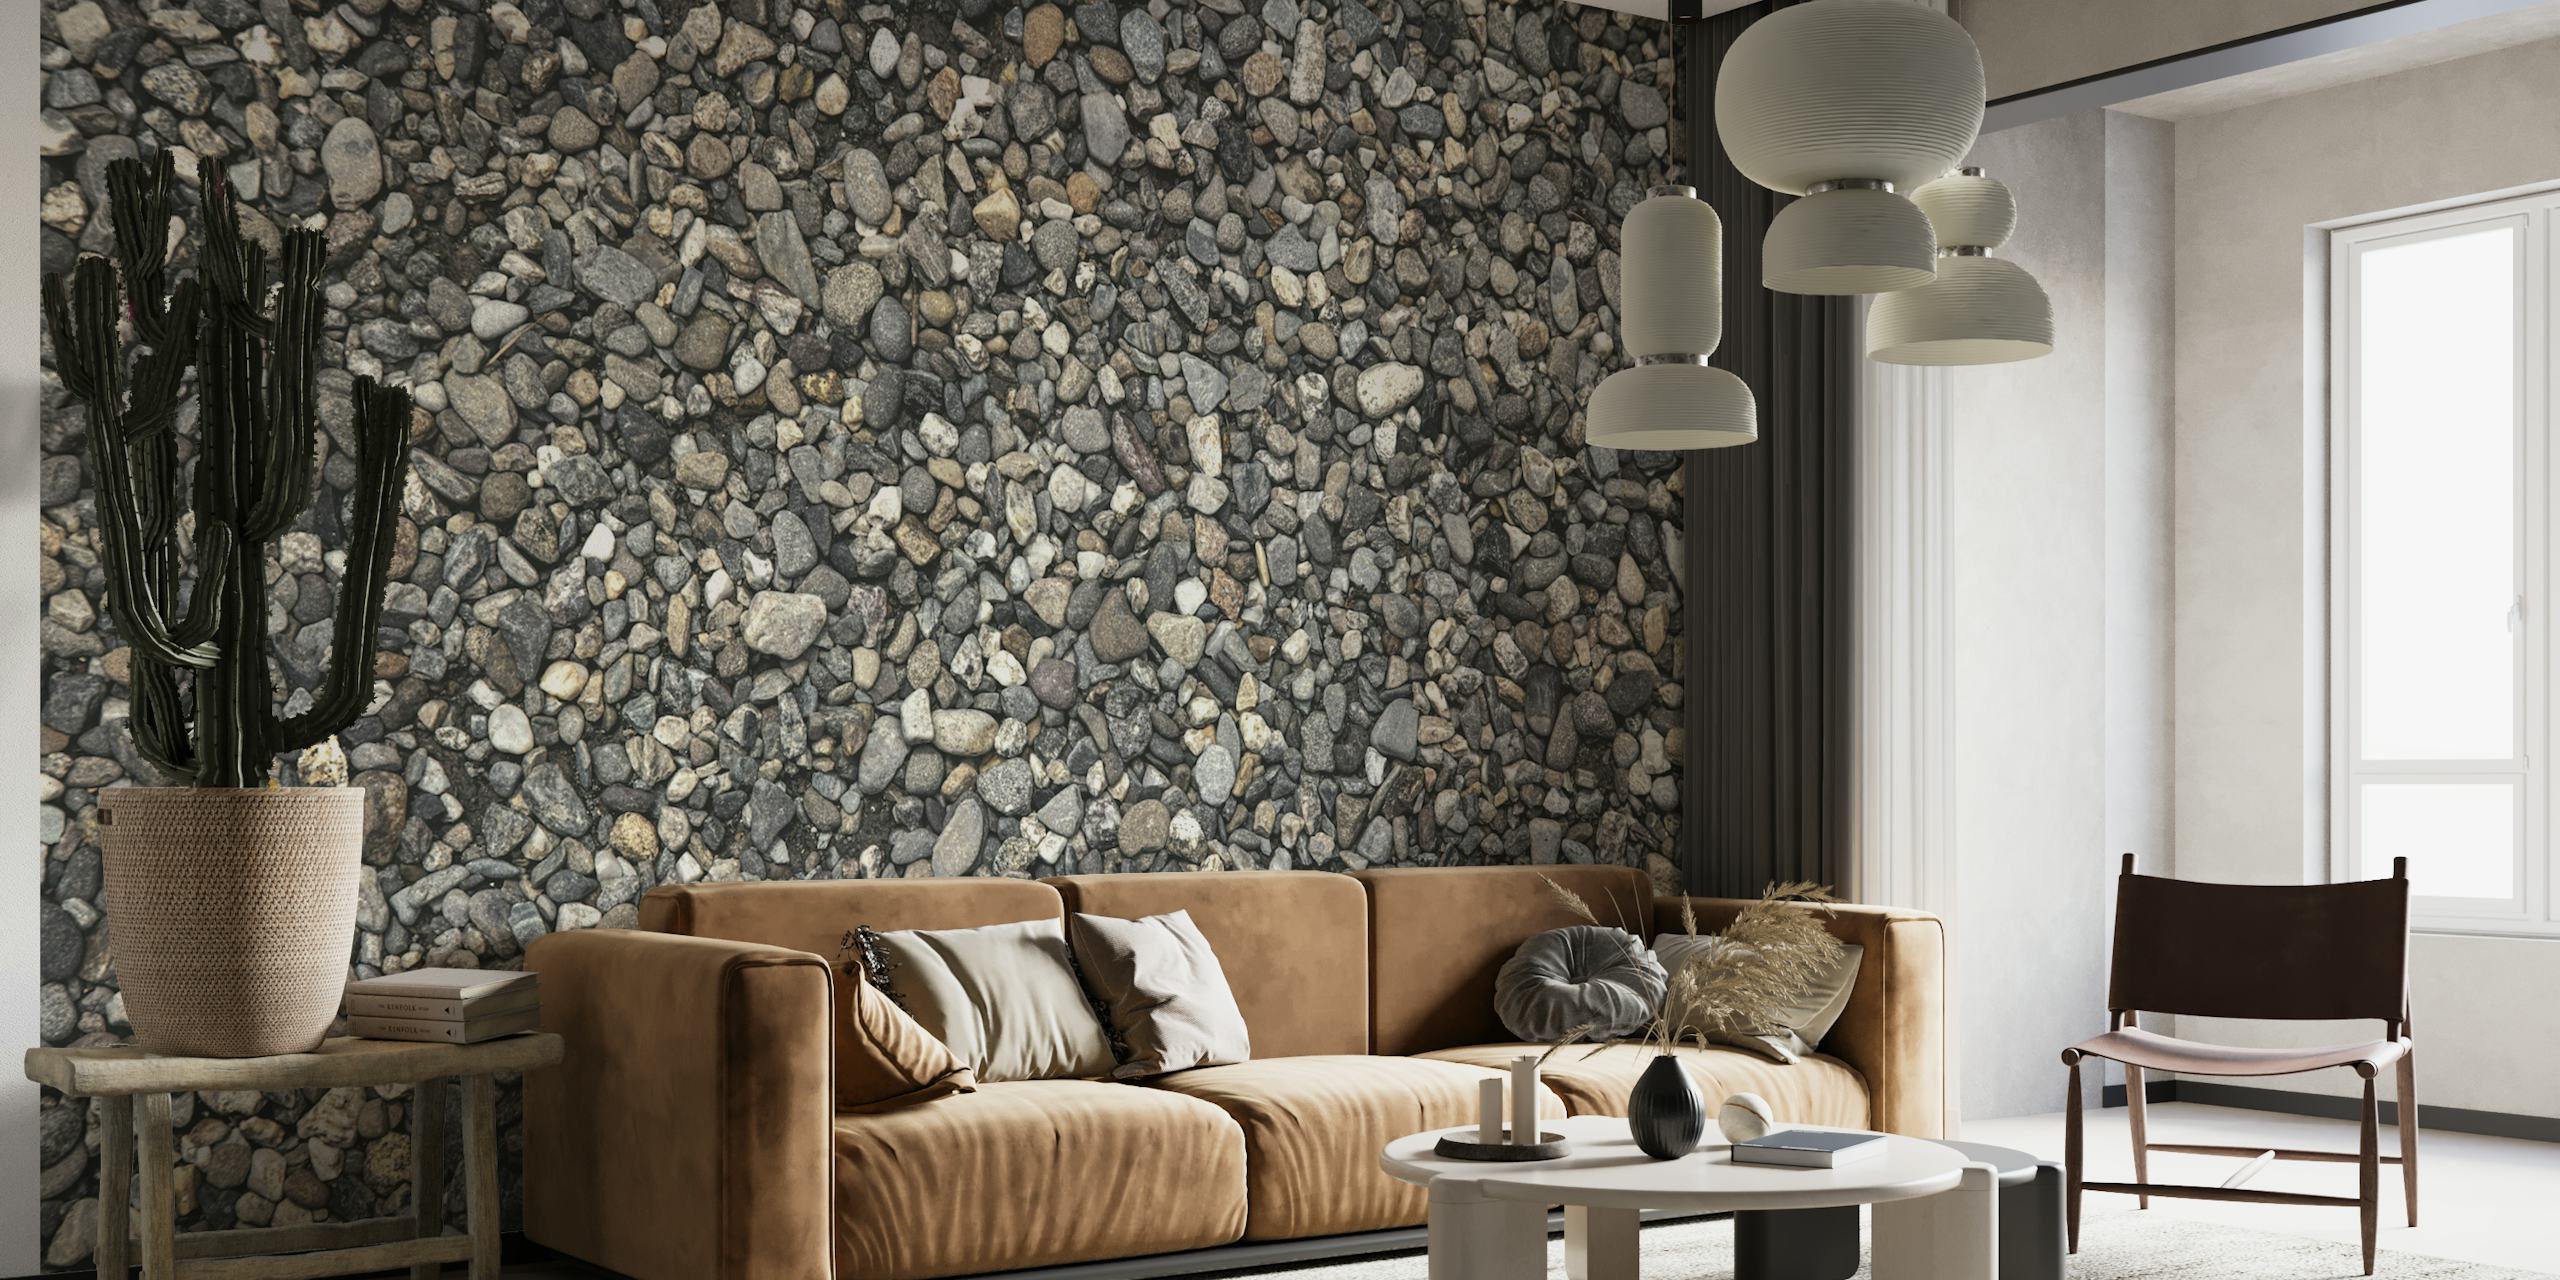 Positano Pebbles wallpaper